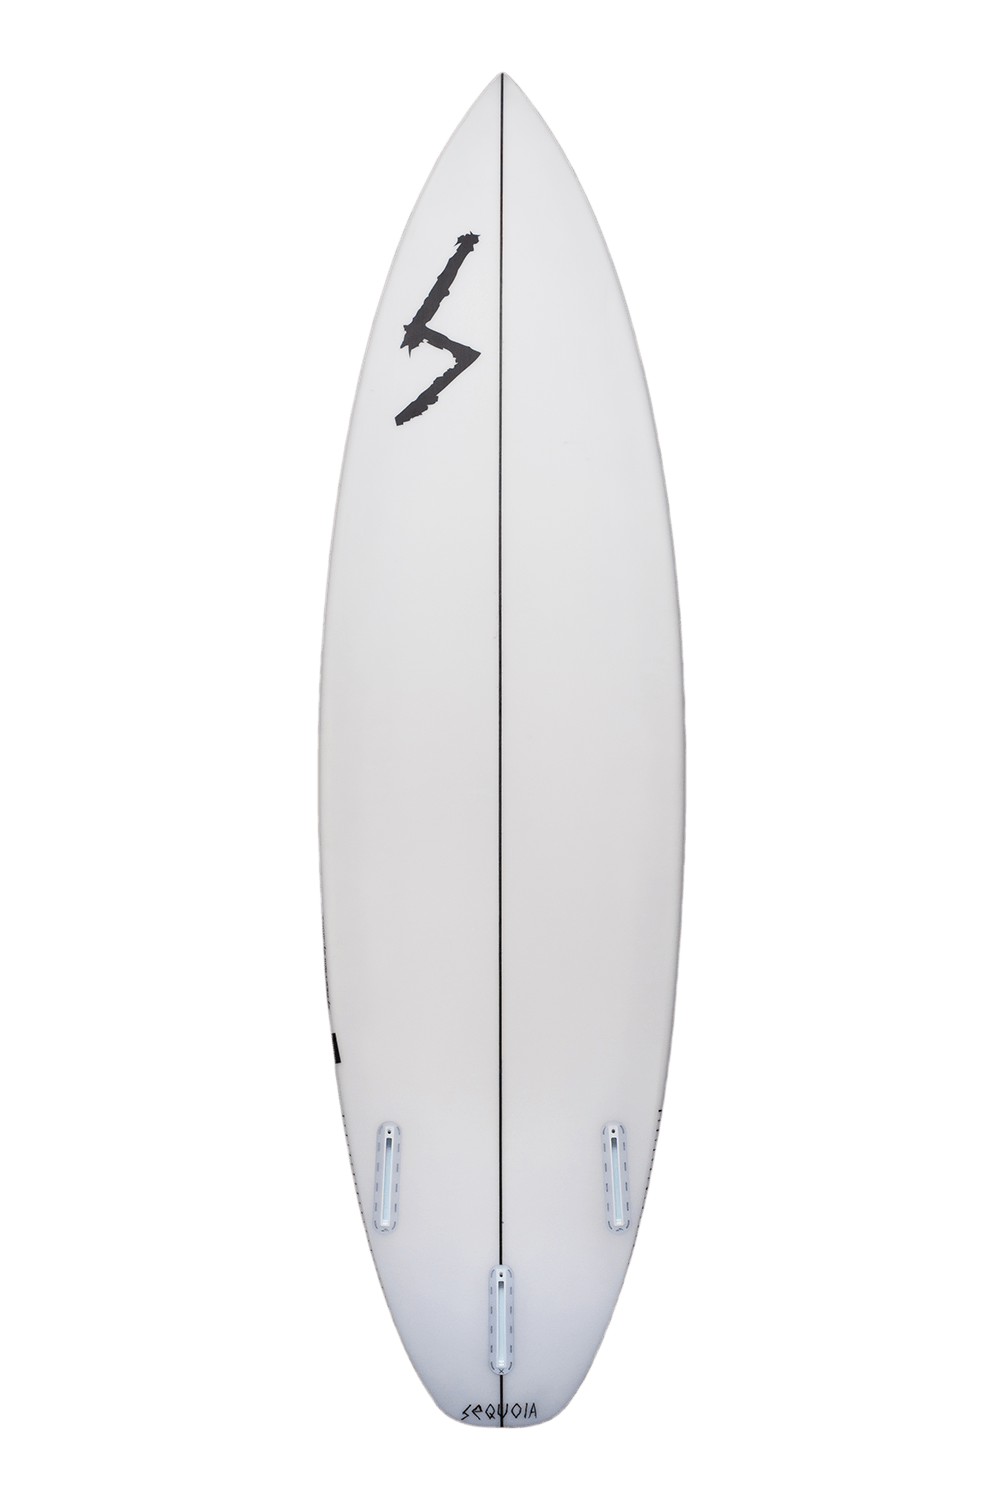 Carlos surfboards wsl qs shape